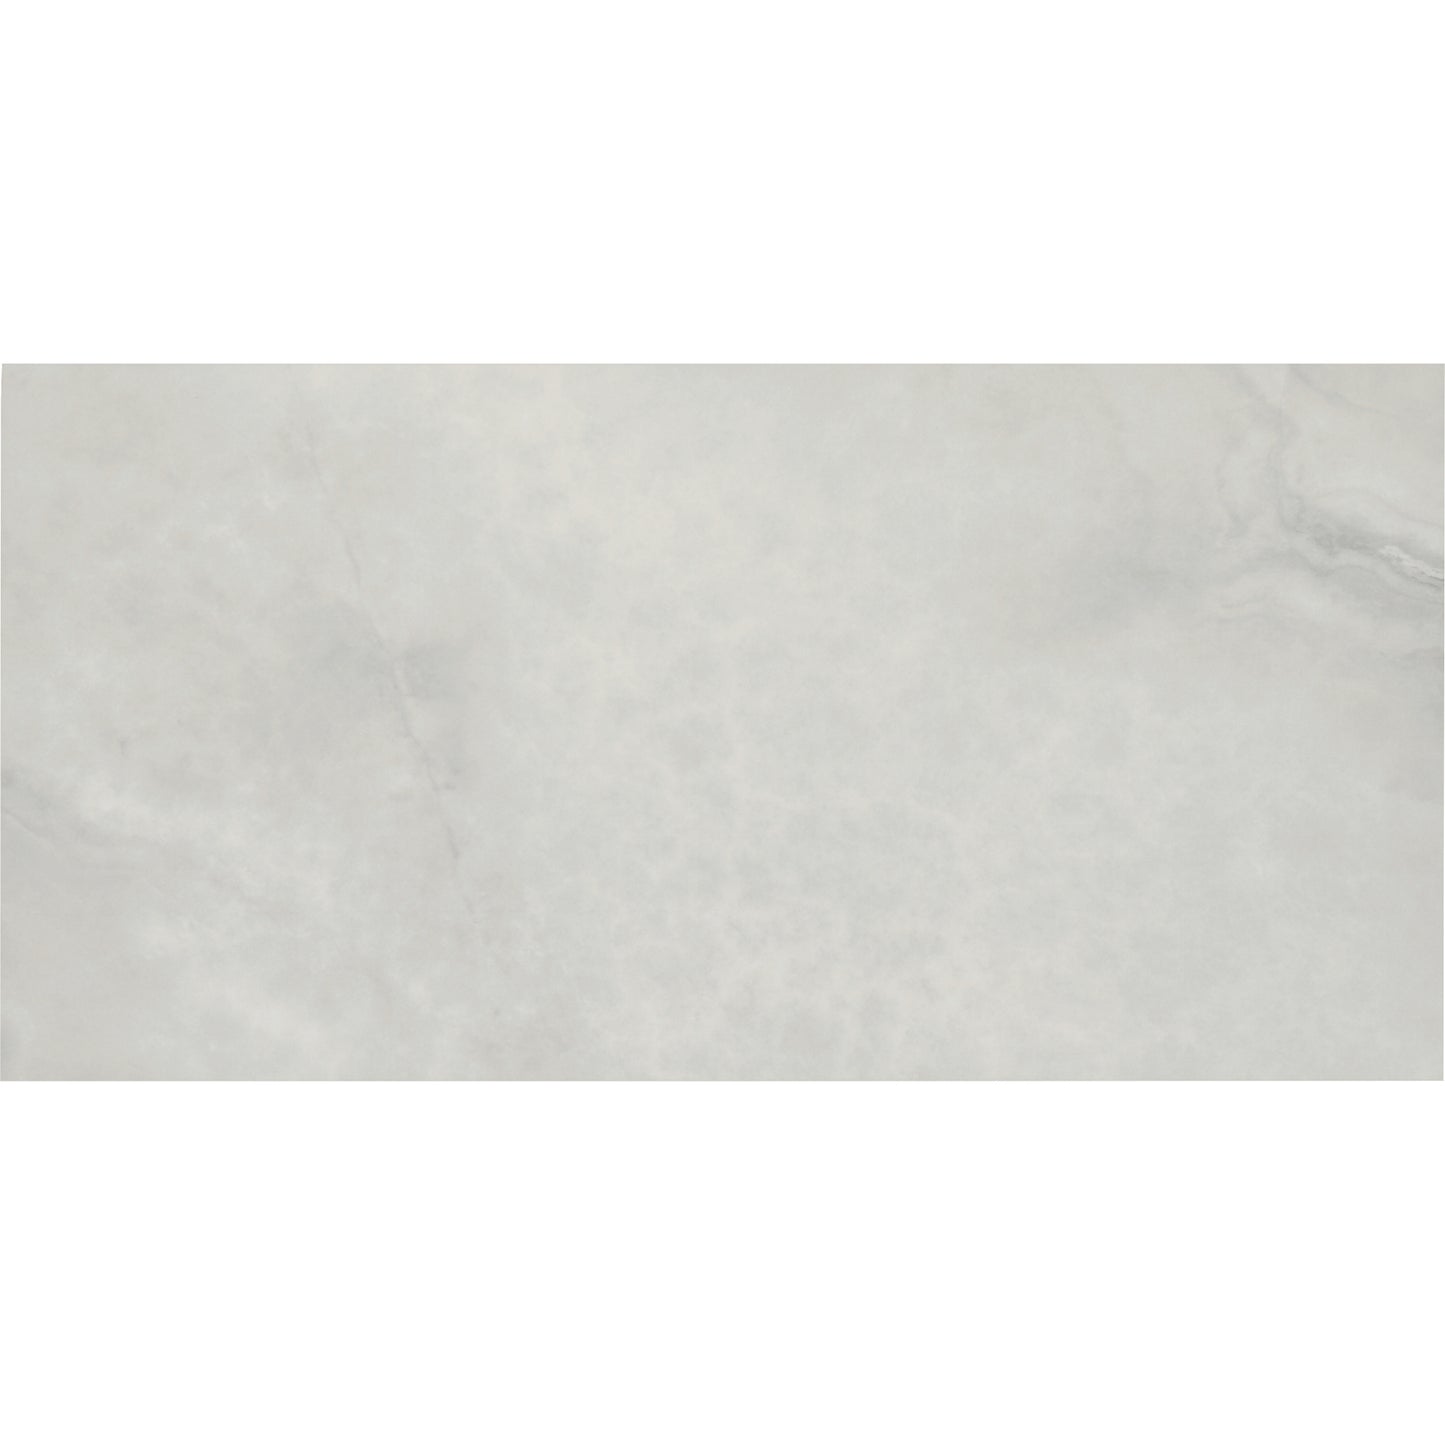 Onyx Grey Rectified Ceramic Marble High Gloss Wall Tiles 30cmx60cm